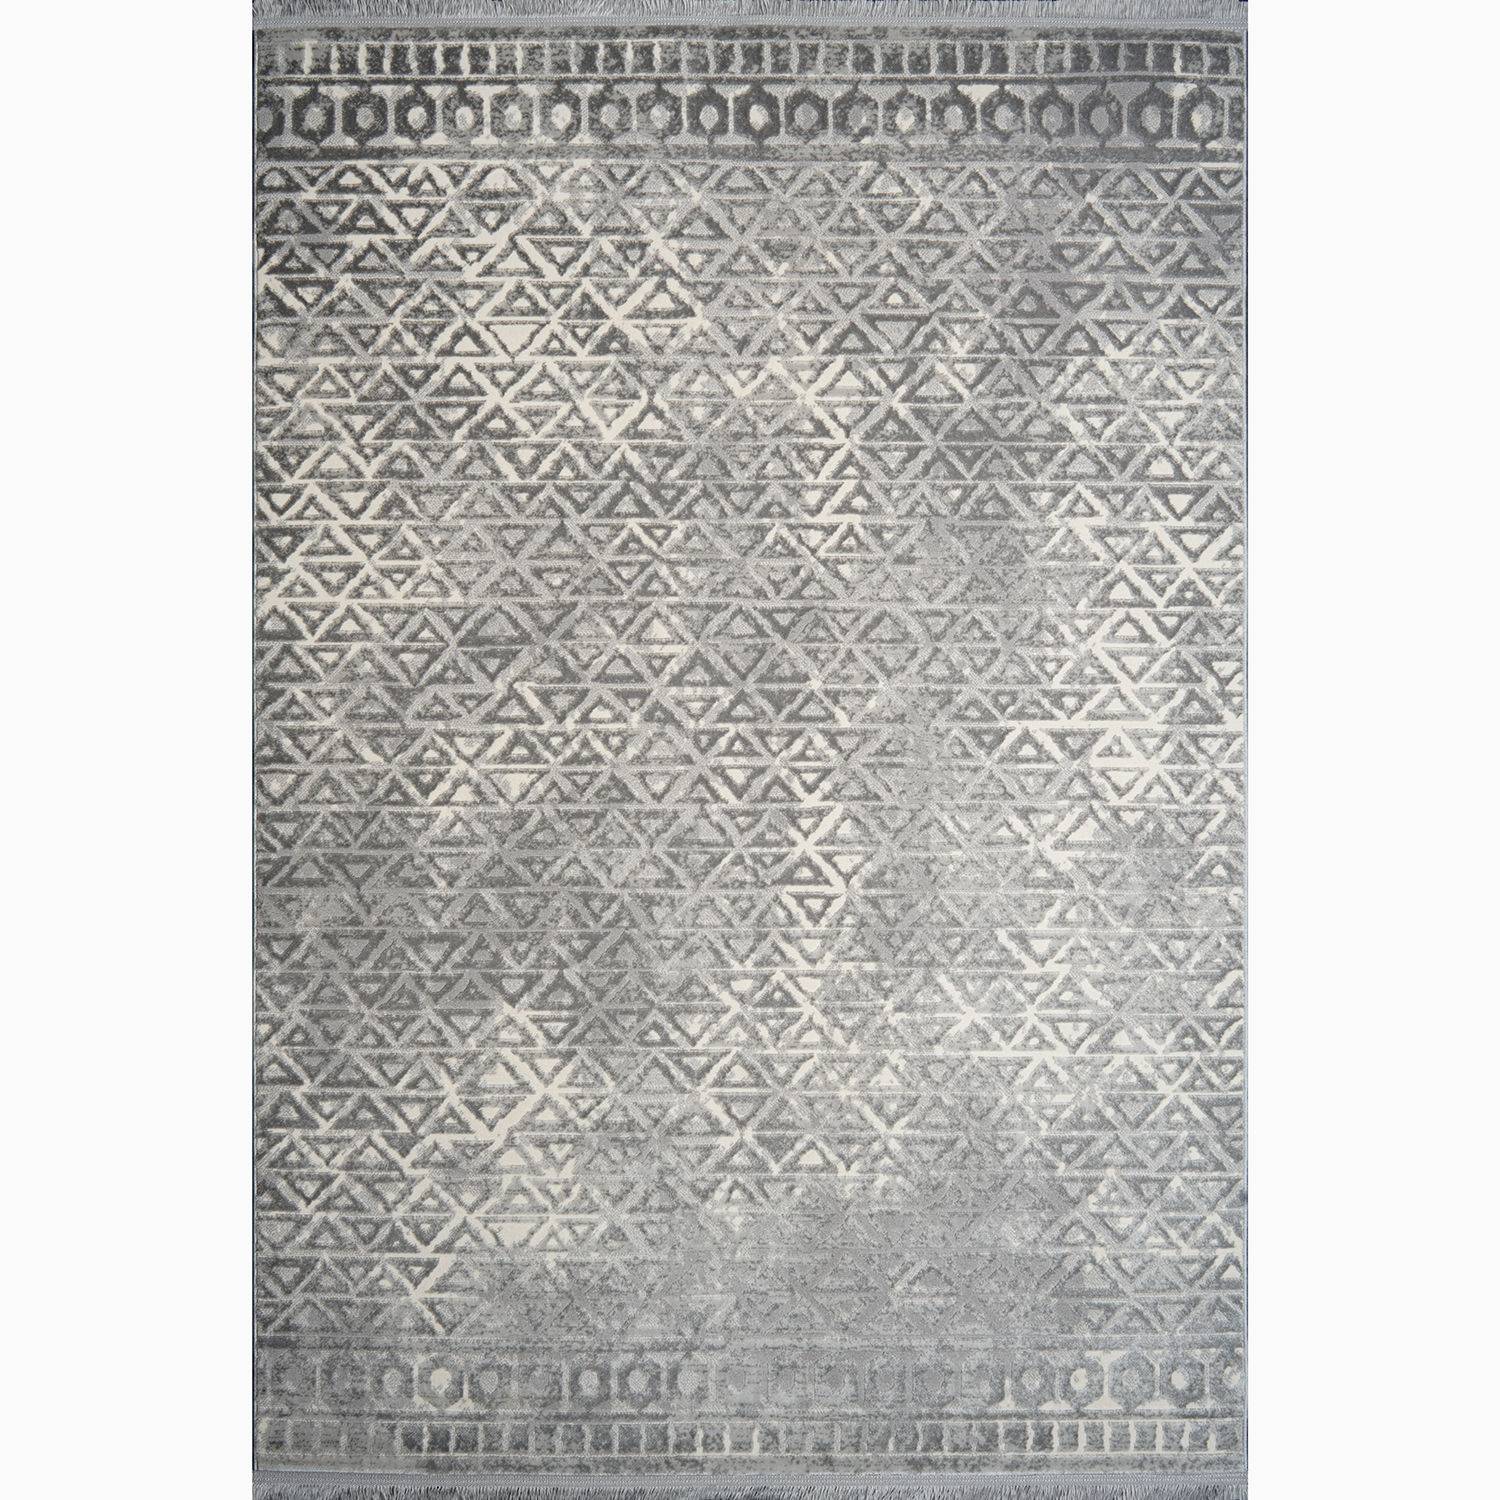 Ketuss Teppich 100x150cm Stoff Geometrisches Muster Grau